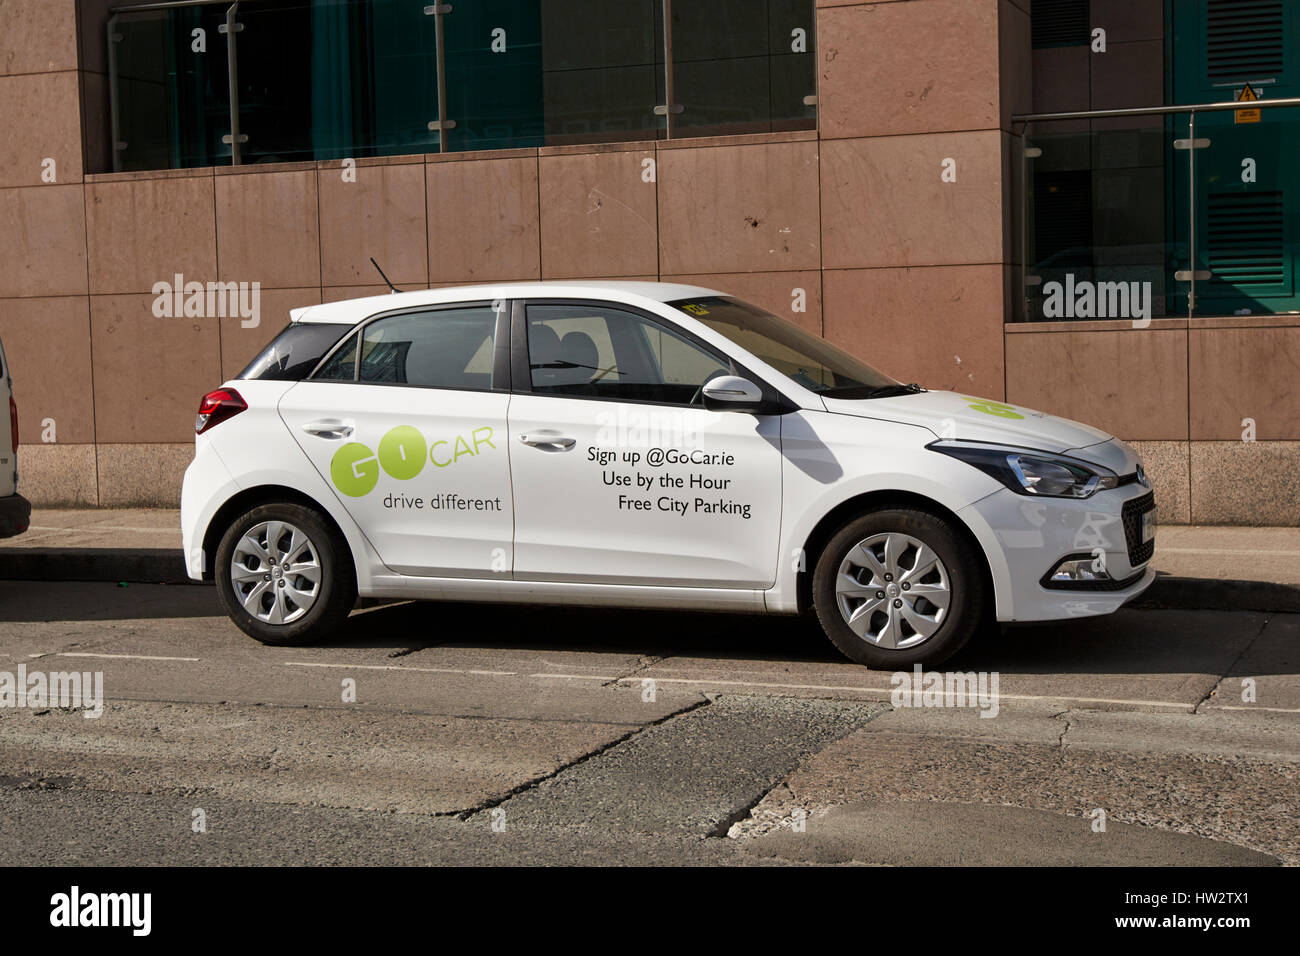 go car irish car sharing company hyundai Dublin Republic of Ireland Stock Photo